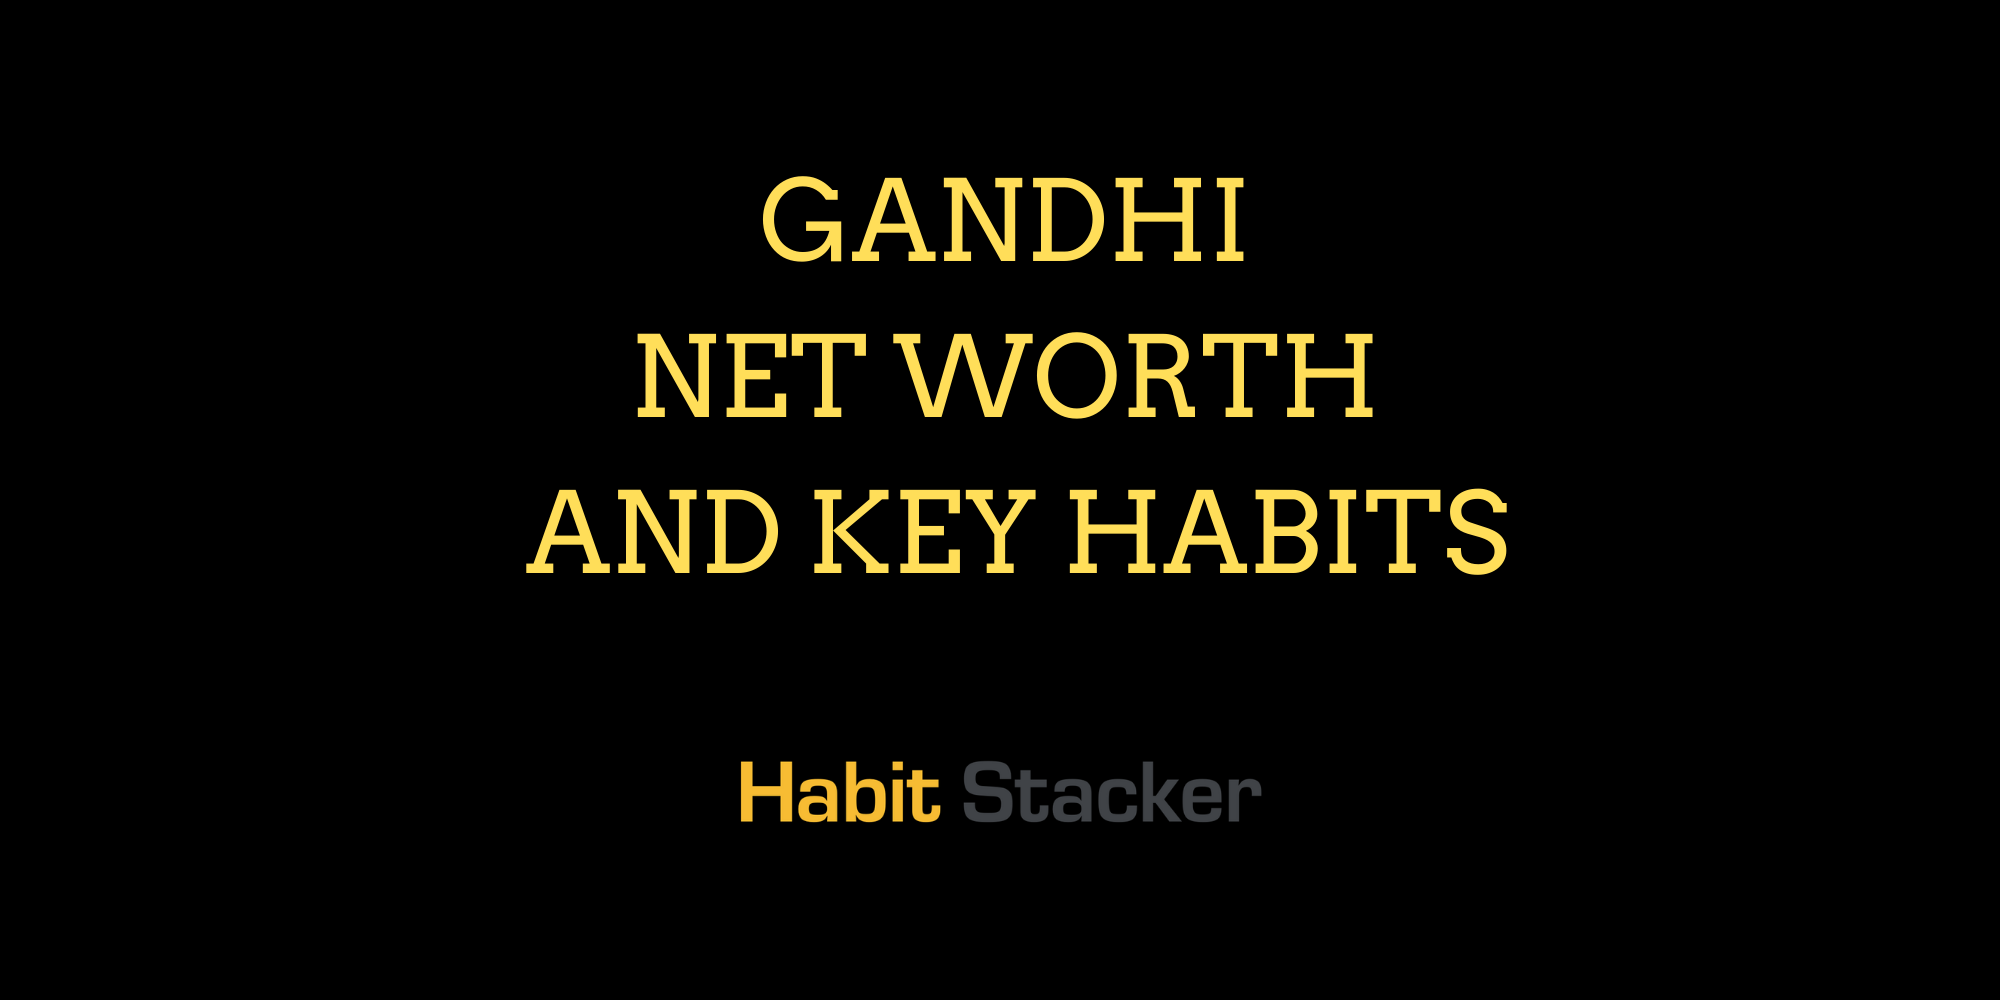 Gandhi Net Worth and Key Habits